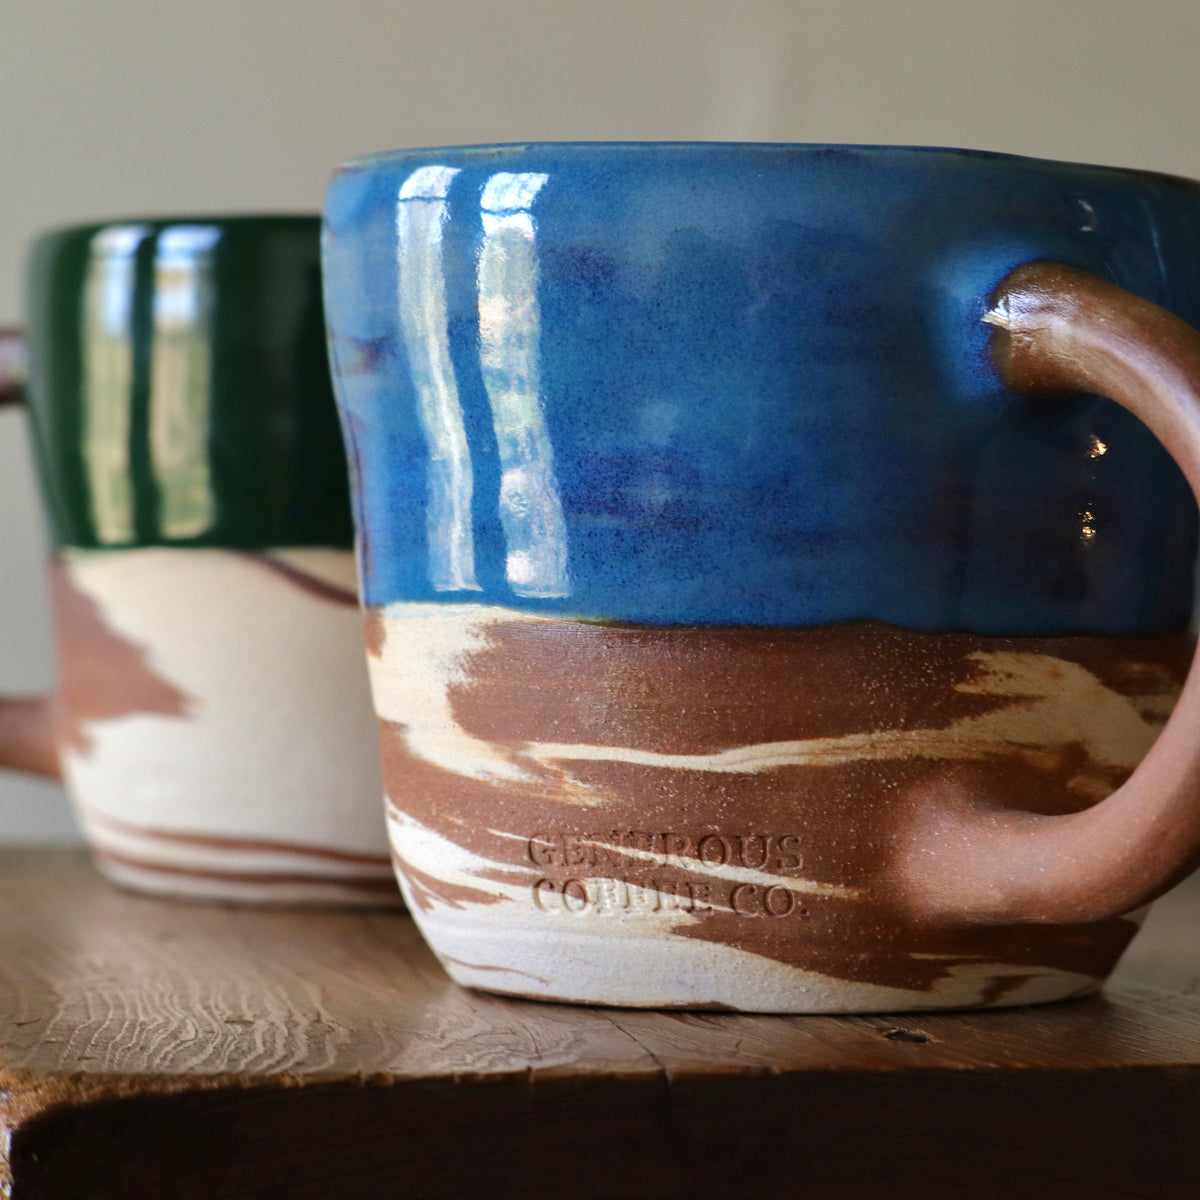 Handcrafted Coffee Mug - Generous + Ninth House